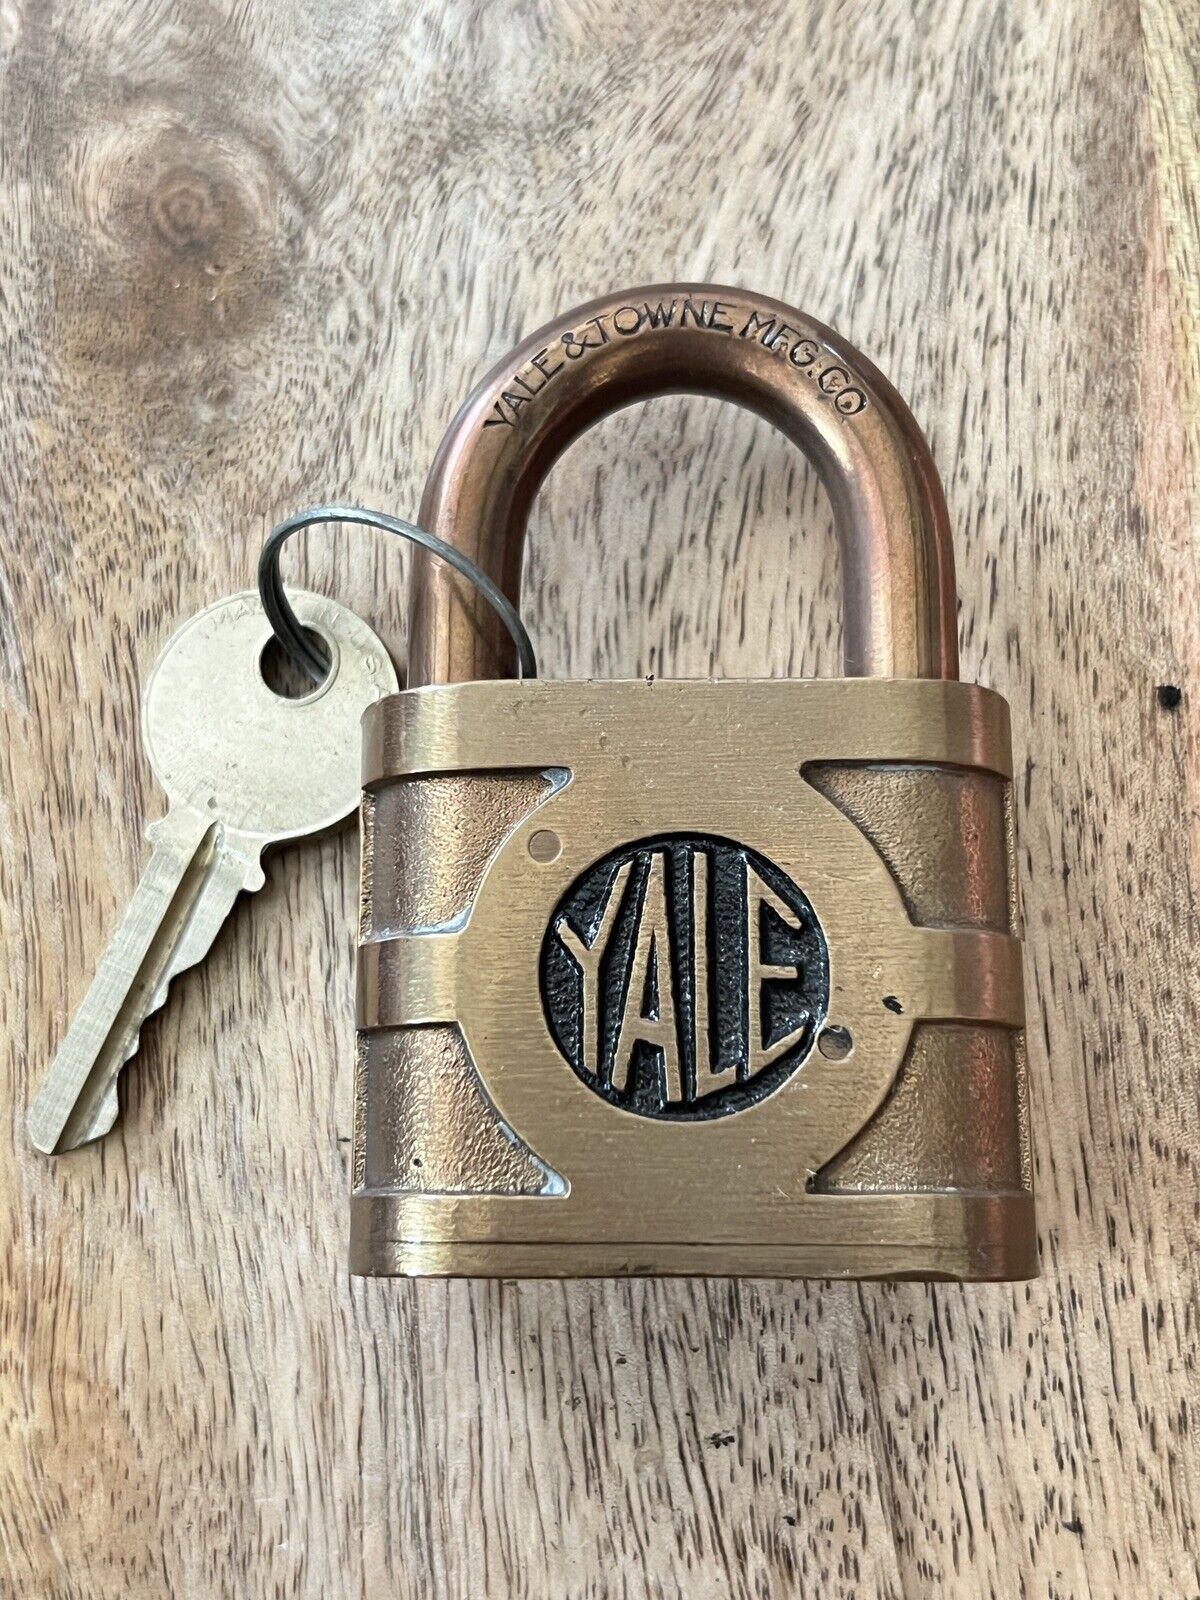 Vintage Old Yale & Towne Padlock With Key